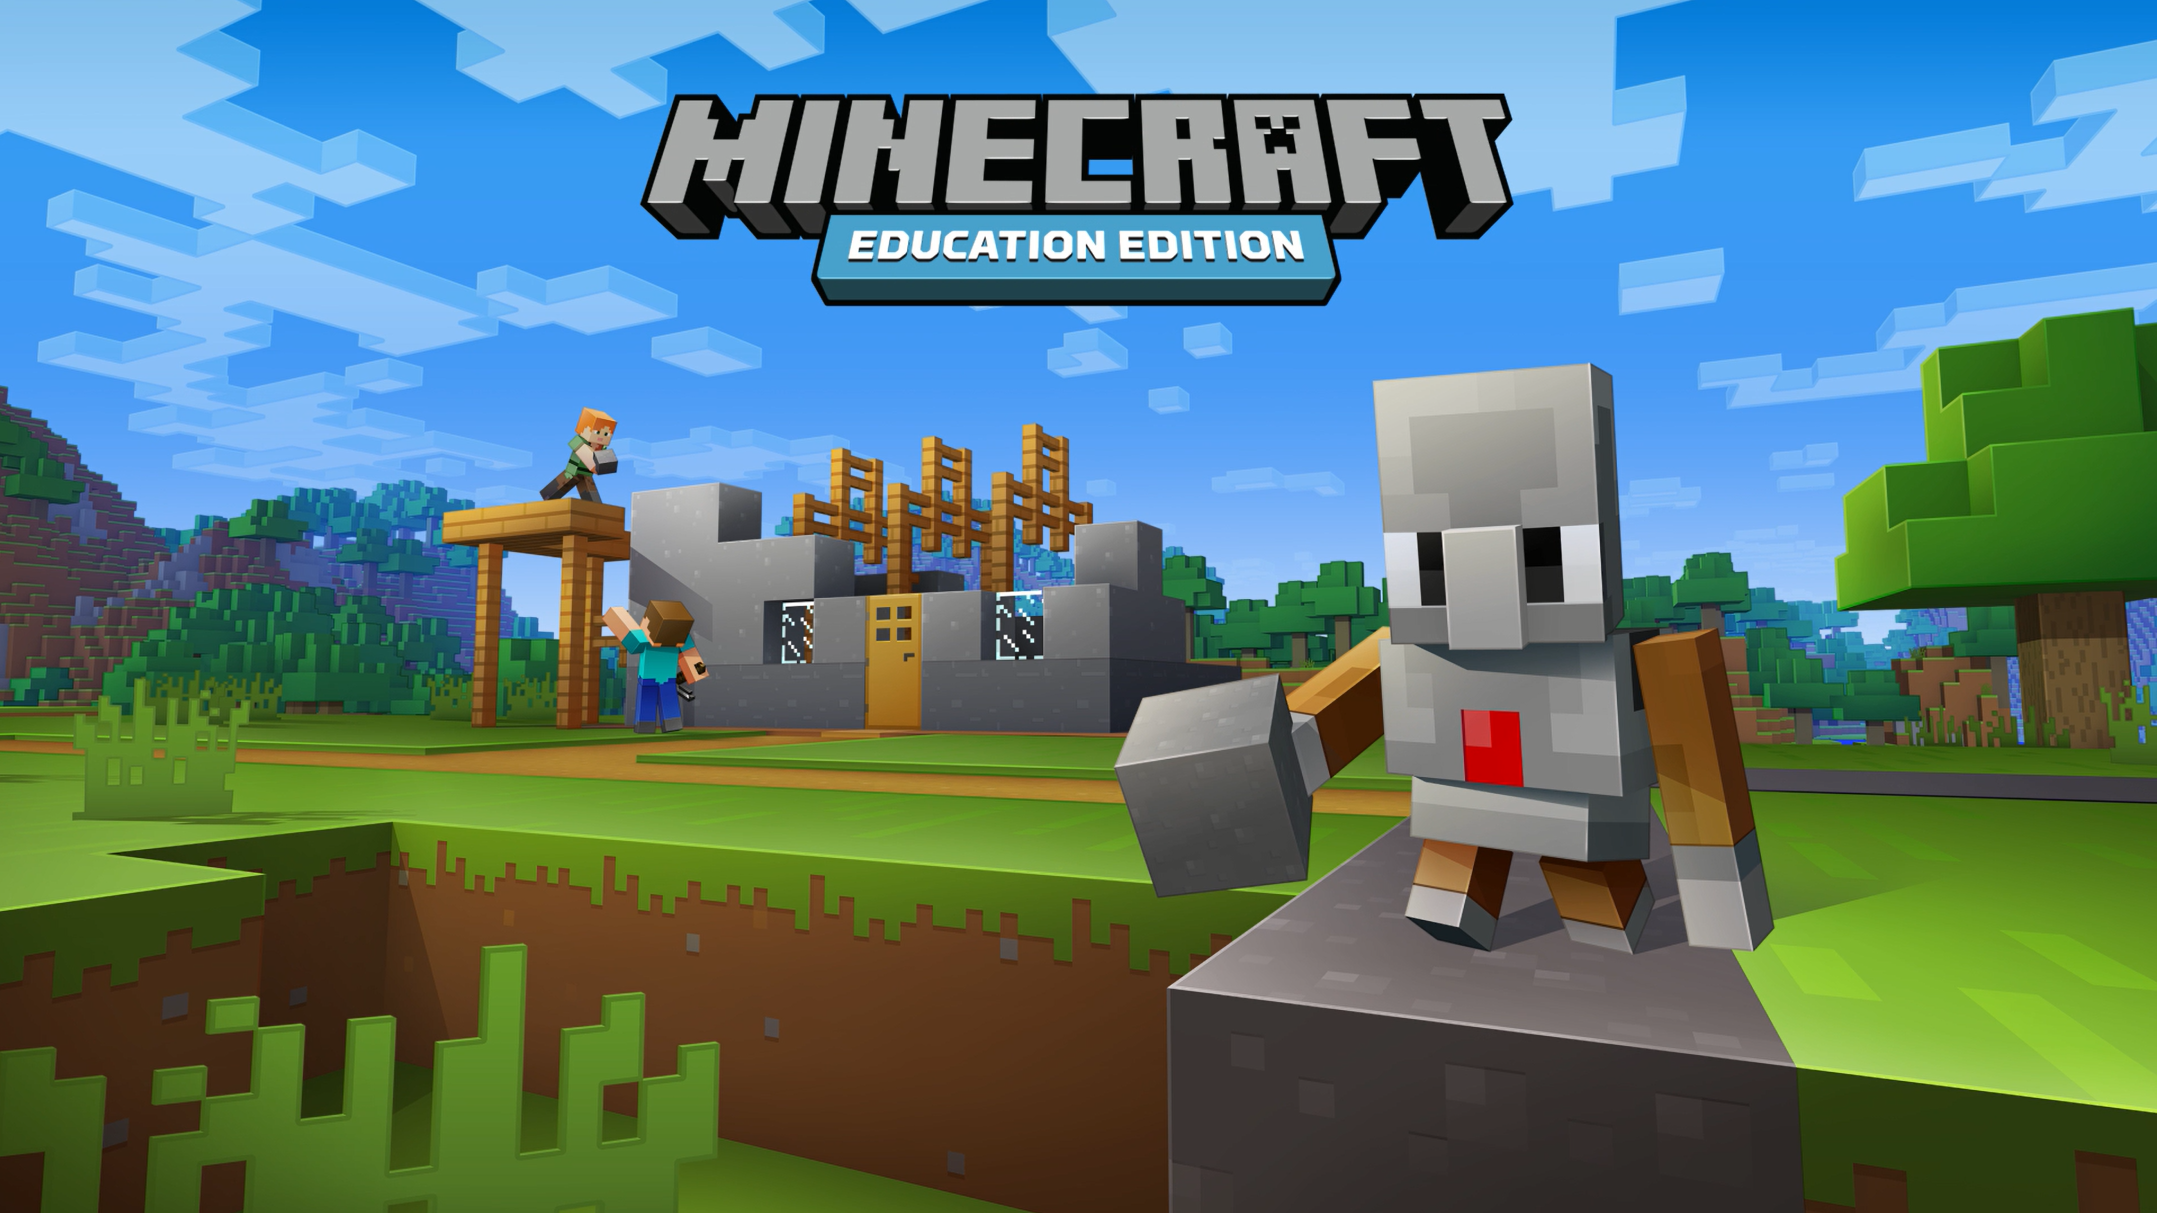 Minecraft: Education Edition key art